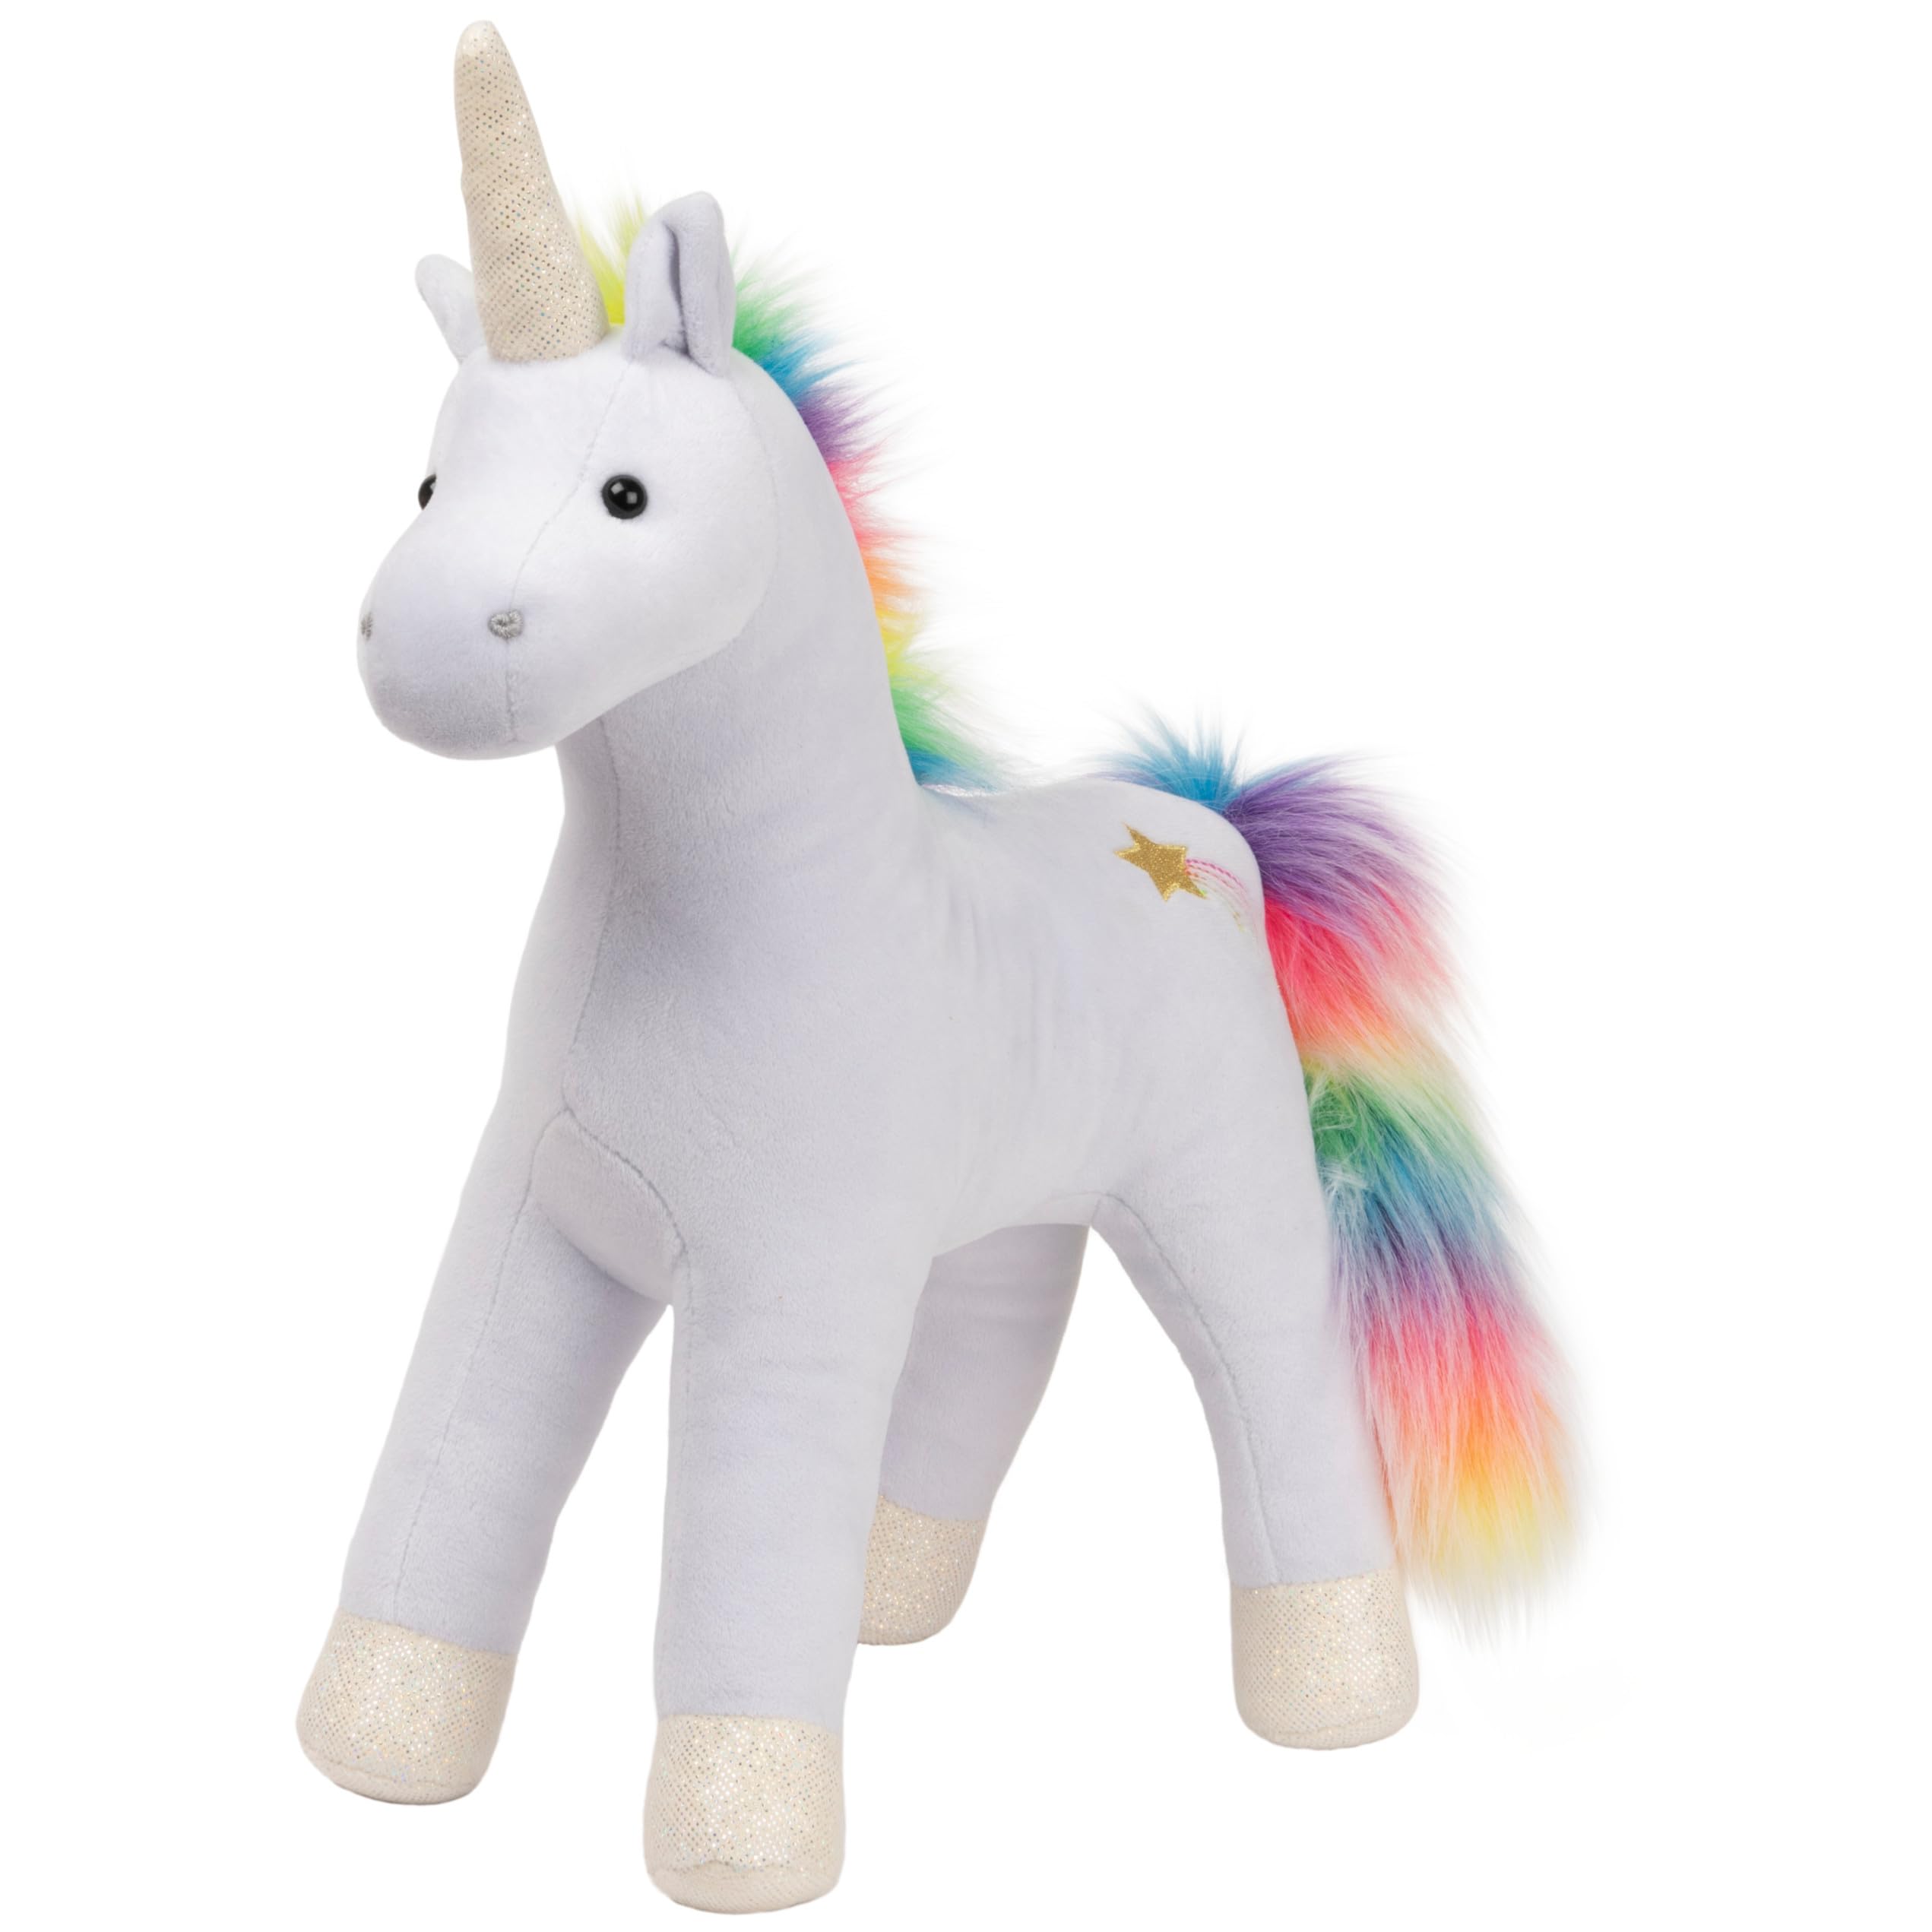 15" Gund Bluebell Rainbow Plush Unicorn Stuffed Animal $12.65 + Free Shipping w/ Prime or on $35+